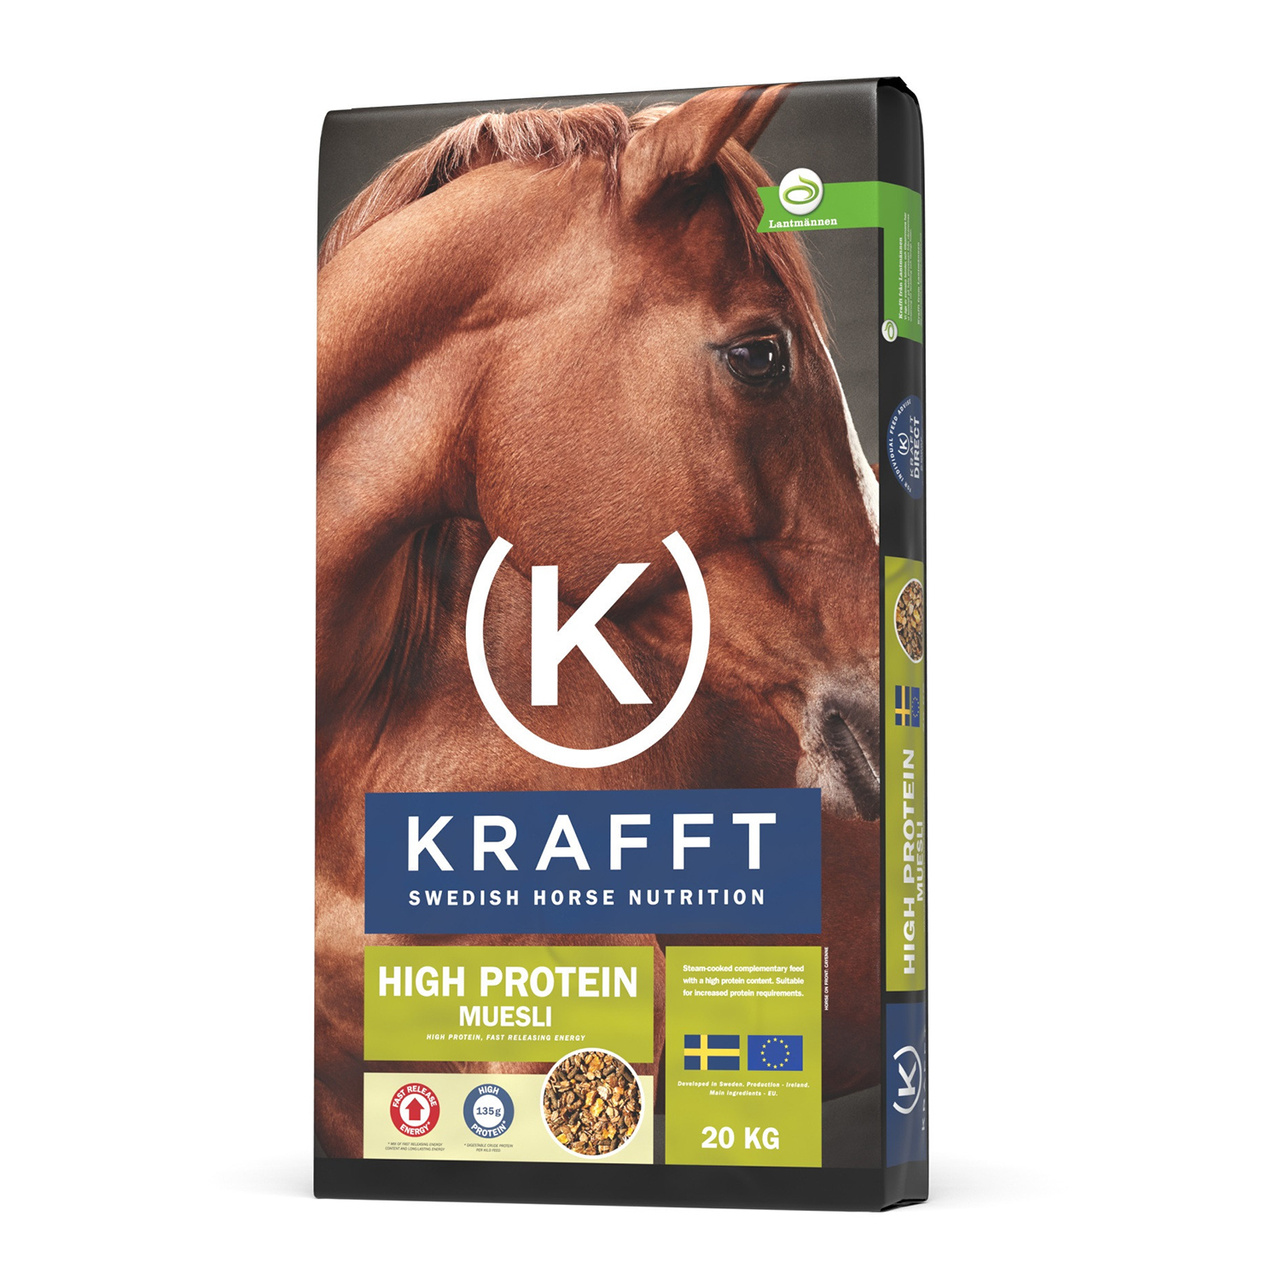 Krafft high protein musli 20kg